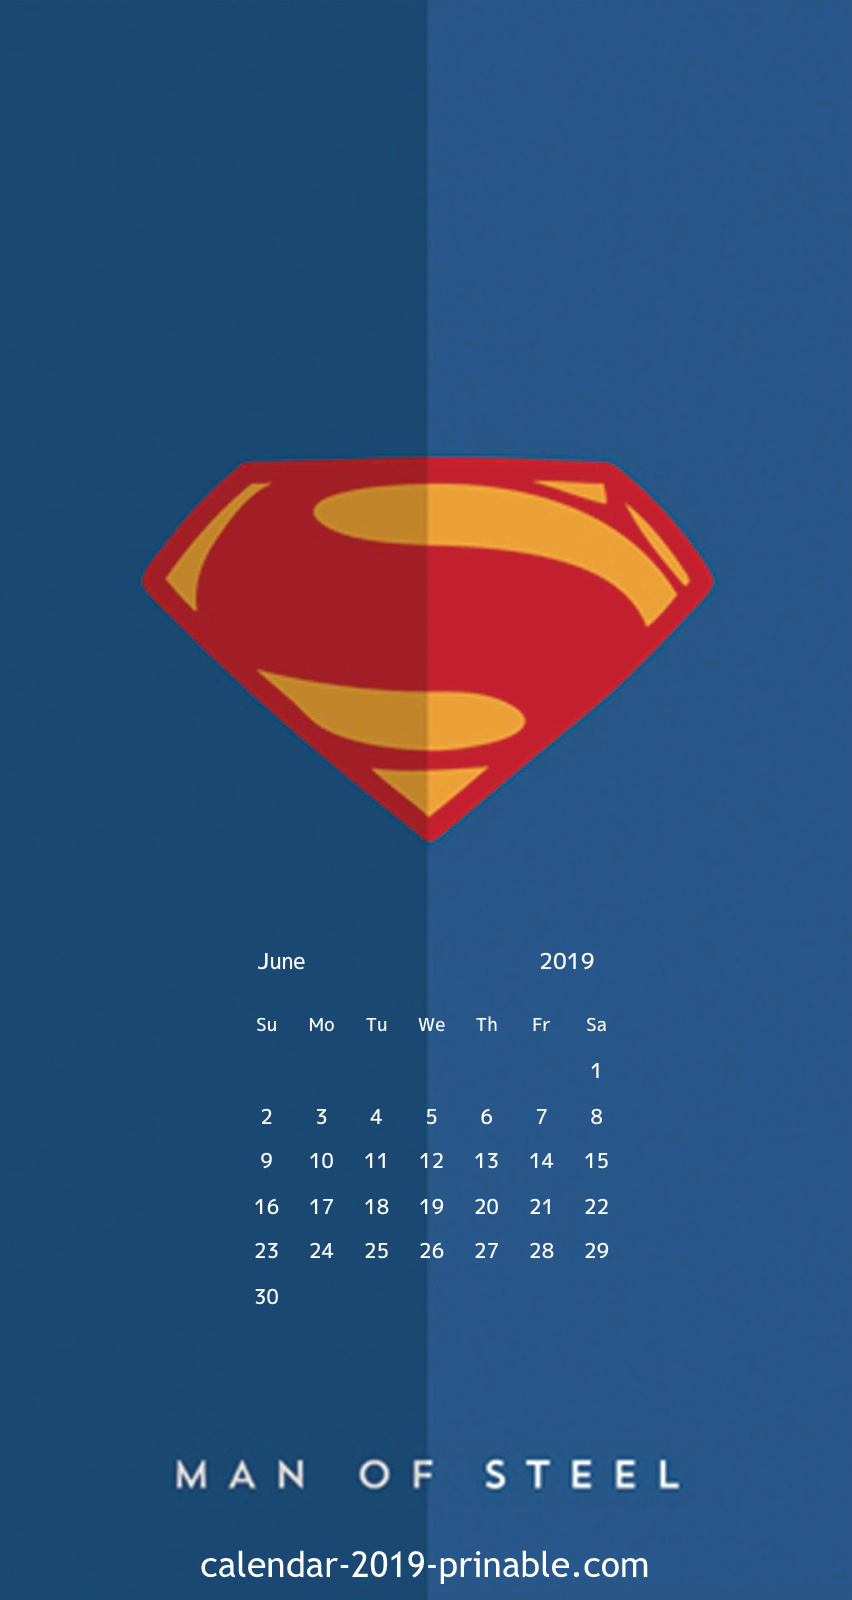 June 2019 Iphone Calendar Wallpaper - Lock Screen Iphone Wallpaper Hd - HD Wallpaper 